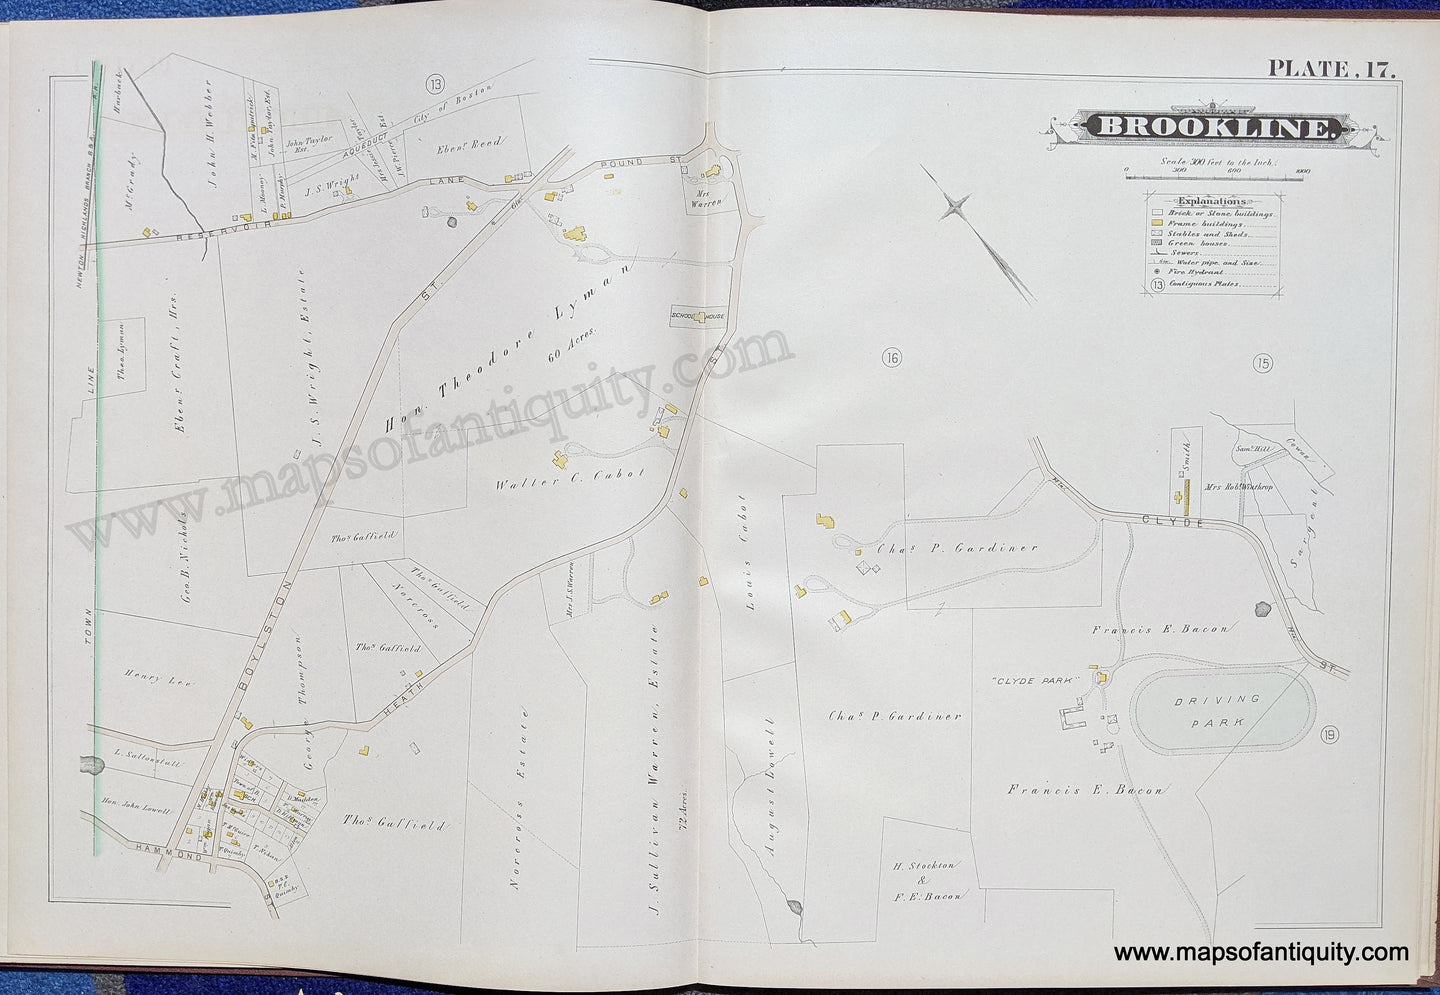 Antique-Map-Brookline-Mass.-Plate-17-United-States-Massachusetts-1884-Hopkins-Maps-Of-Antiquity-1800s-19th-century